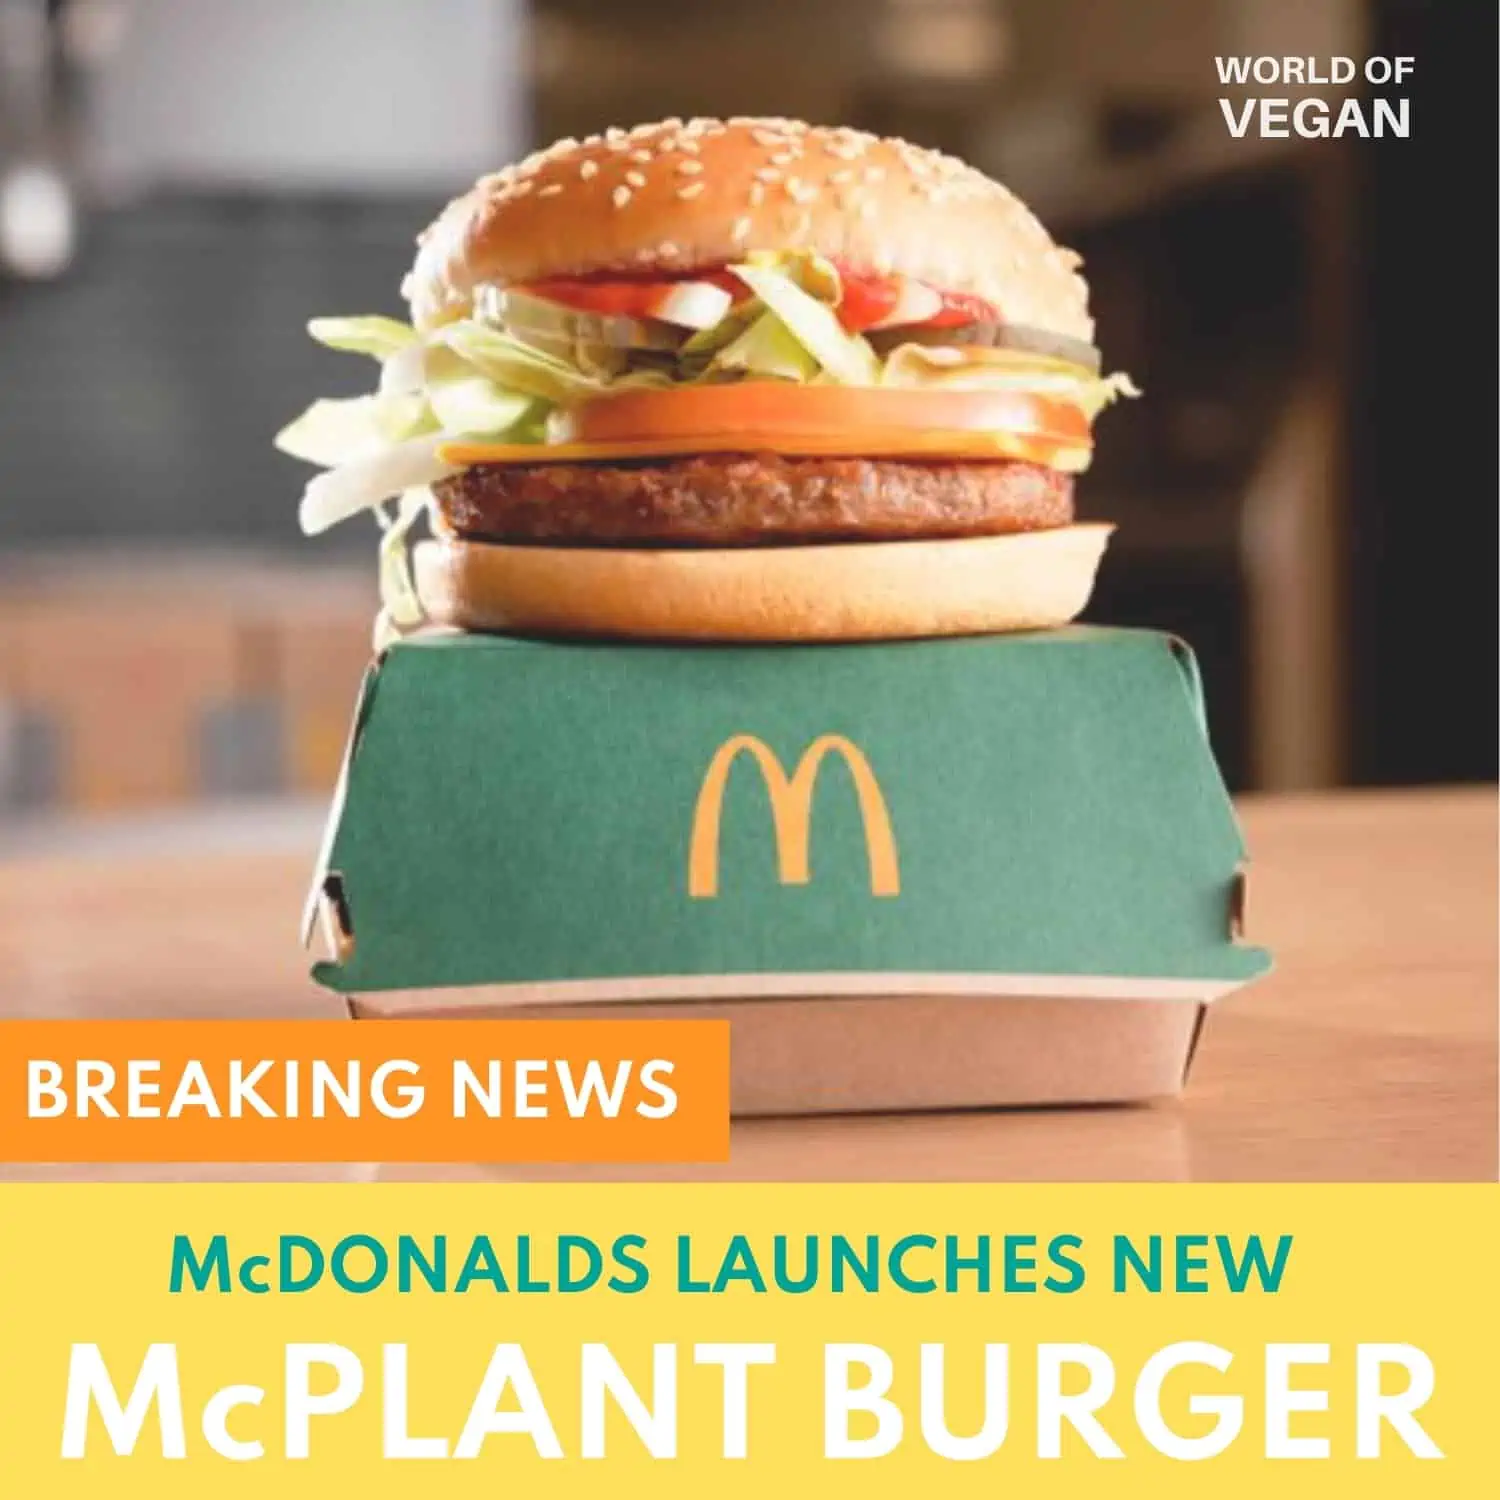 mcdonalds mcplant burger photo news